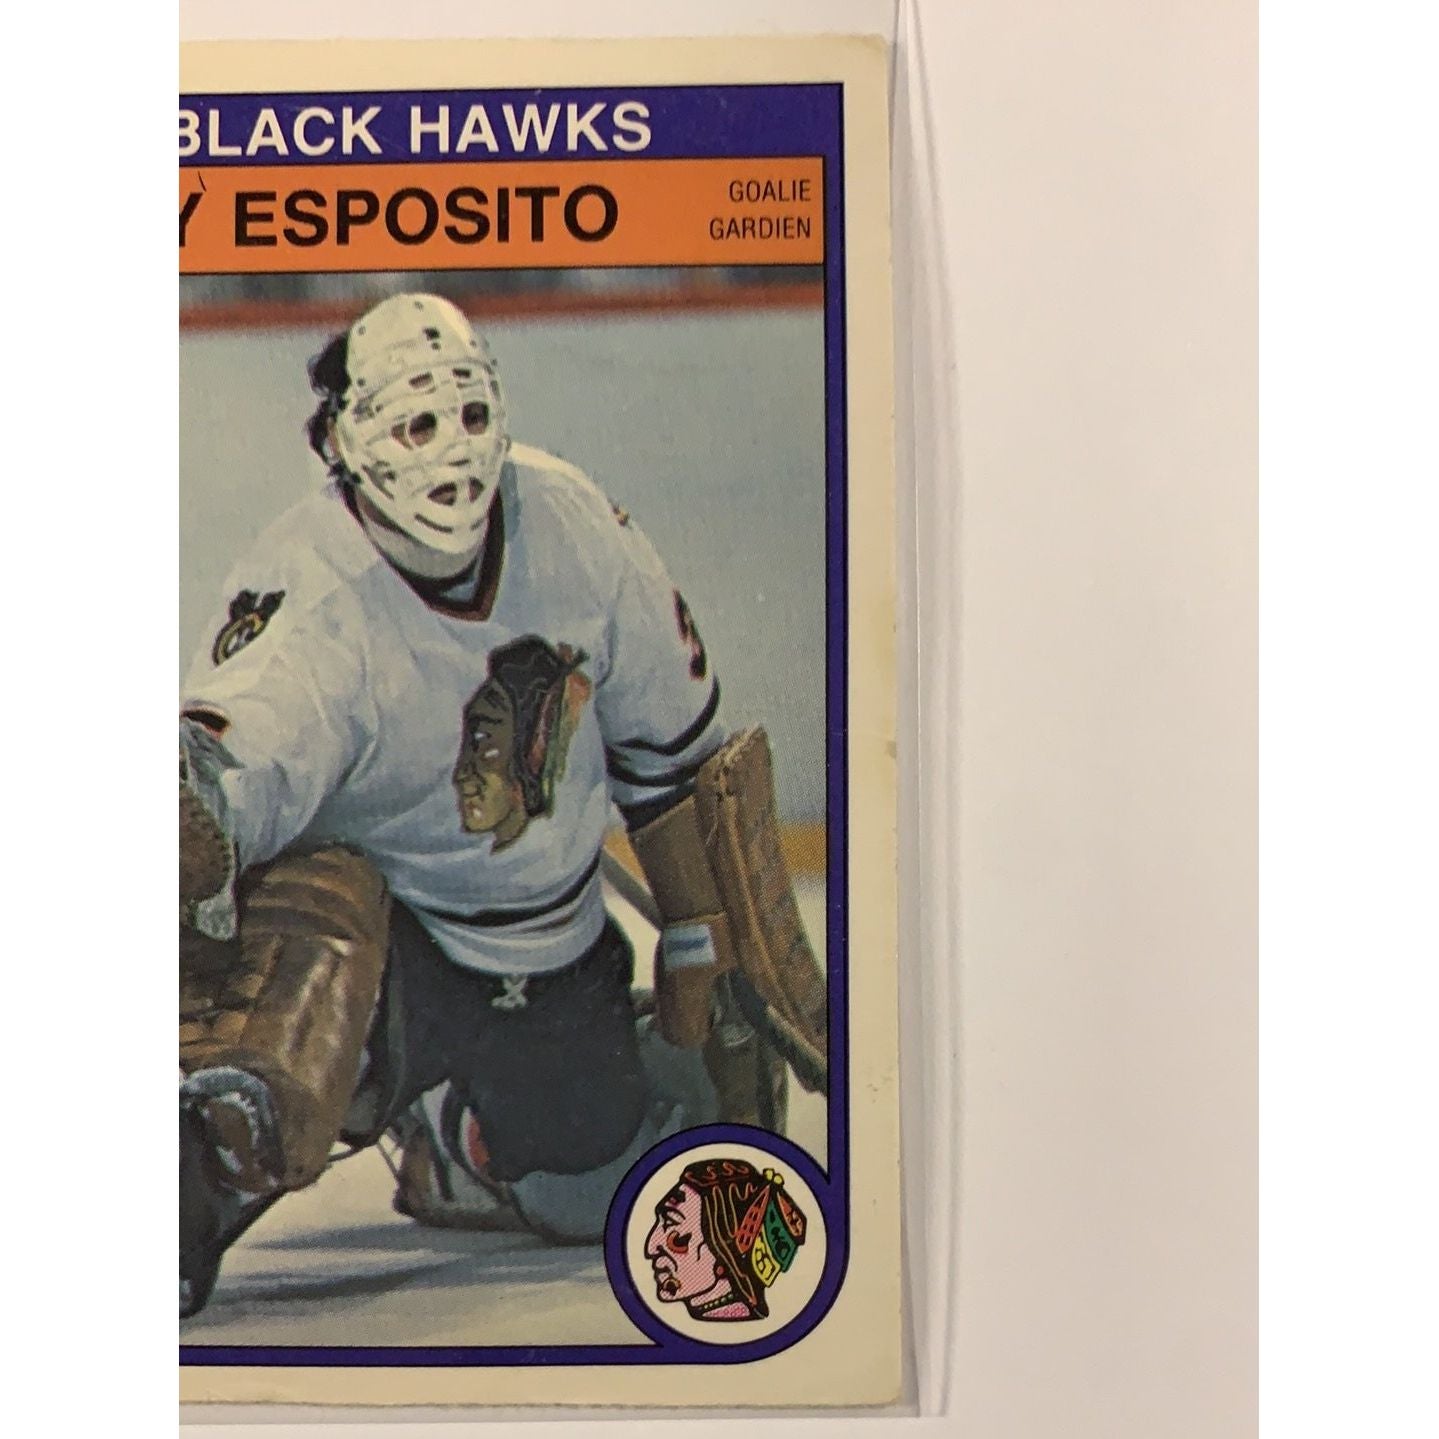  1982-83 O-Pee-Chee Tony Esposito Base #64  Local Legends Cards & Collectibles